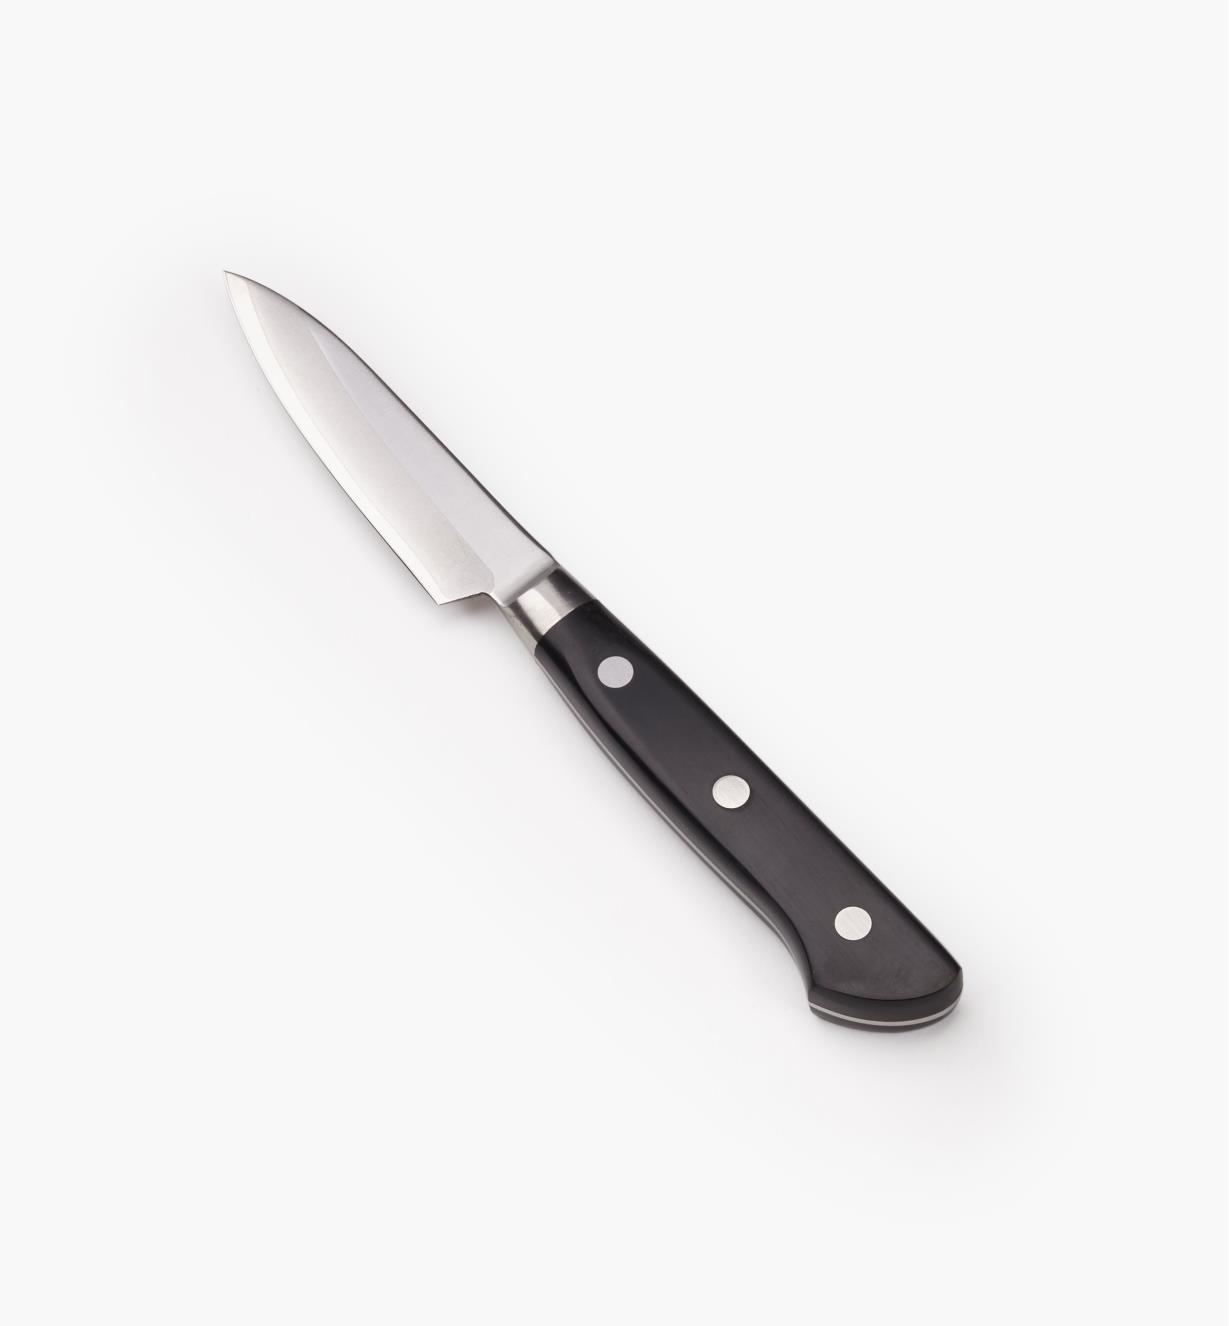 60W0506 - 83mm (3 1/4") Paring Knife*